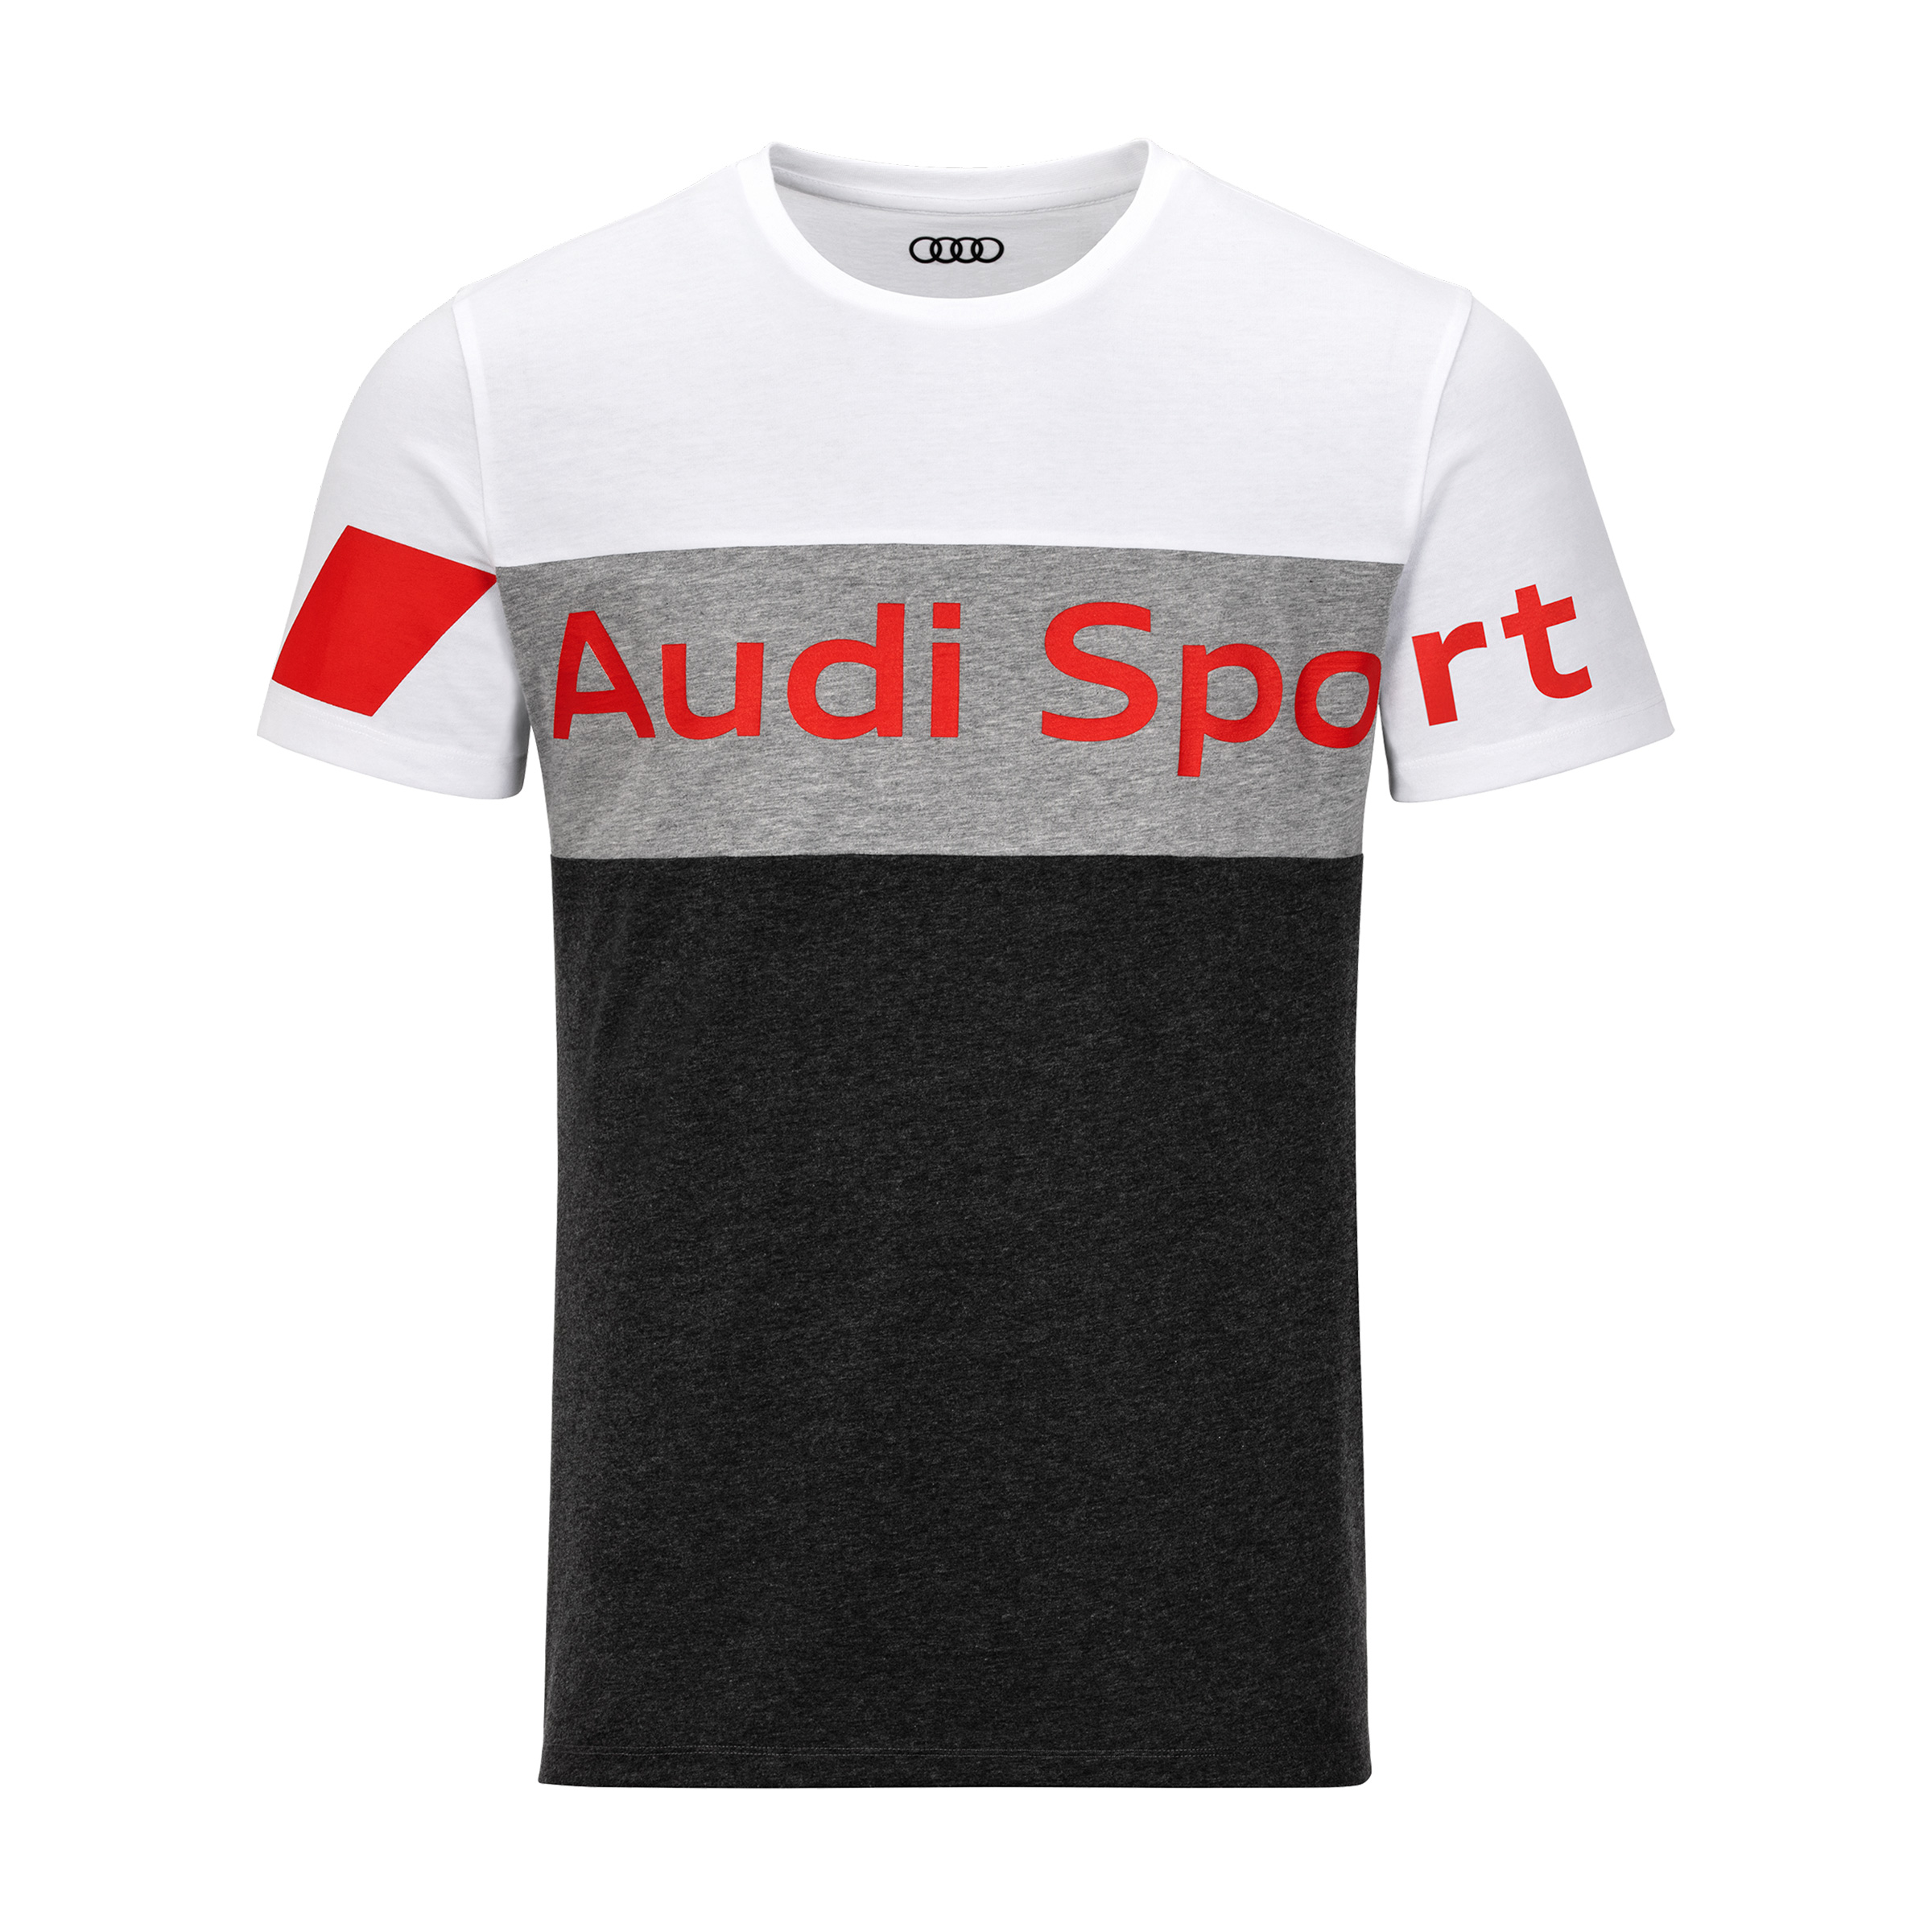 Audi Sport T-Shirt, Herren, grau/weiß